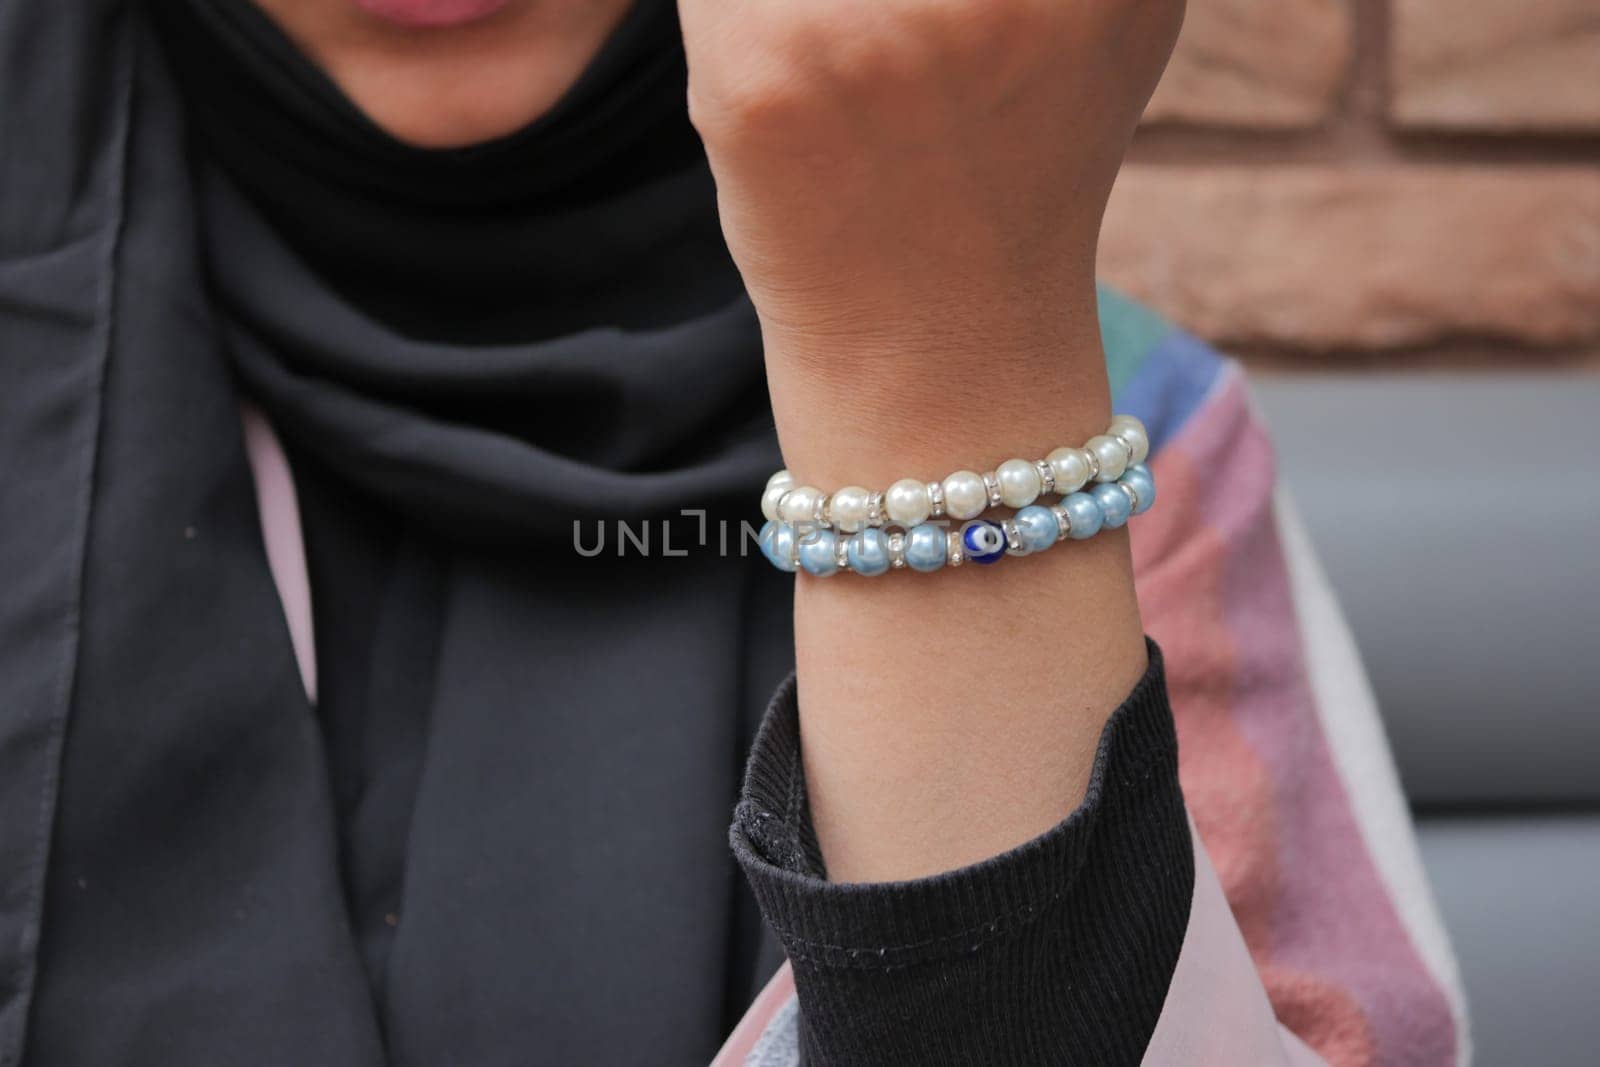 Jeweler bracelet on the female wrist. by towfiq007